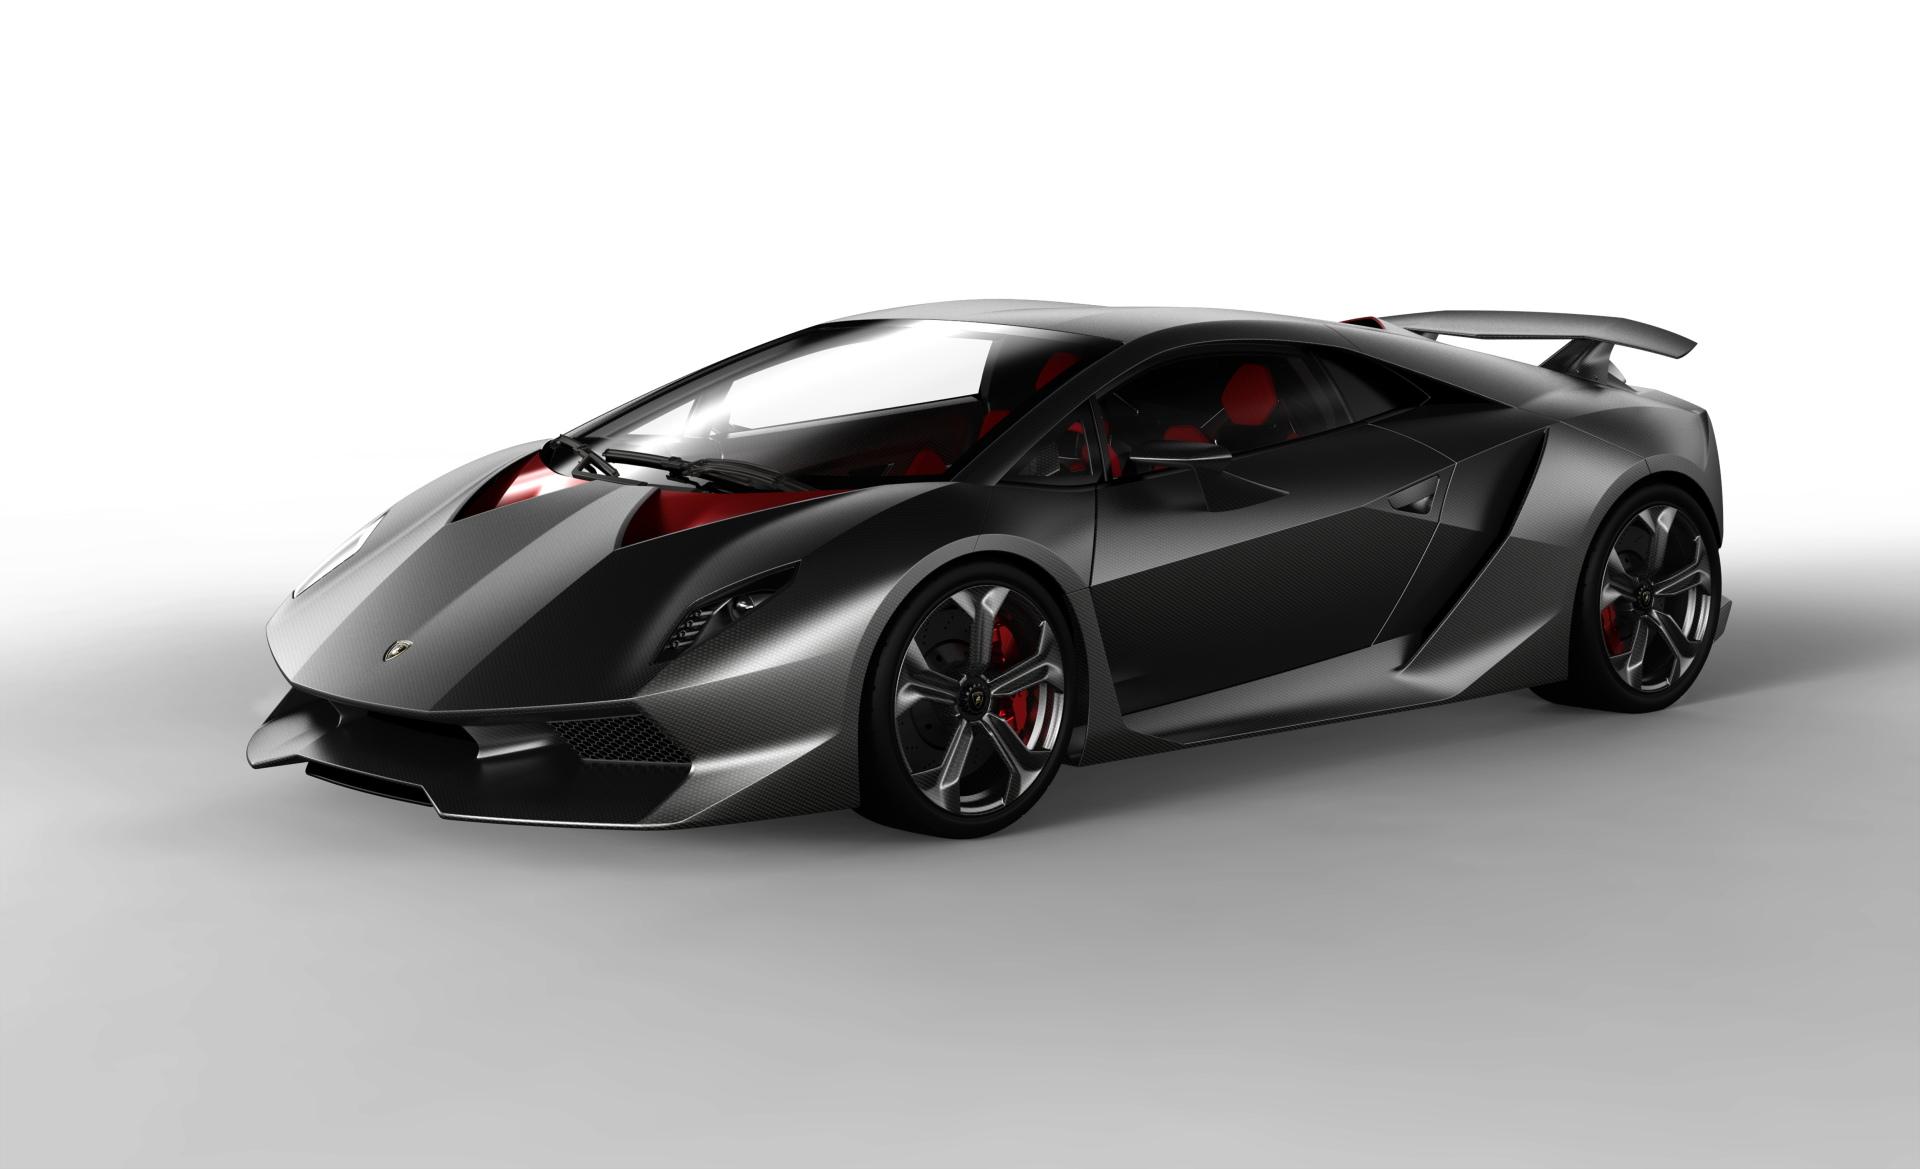 Lamborghini Sesto Elemento at 1024 x 1024 iPad size wallpapers HD quality